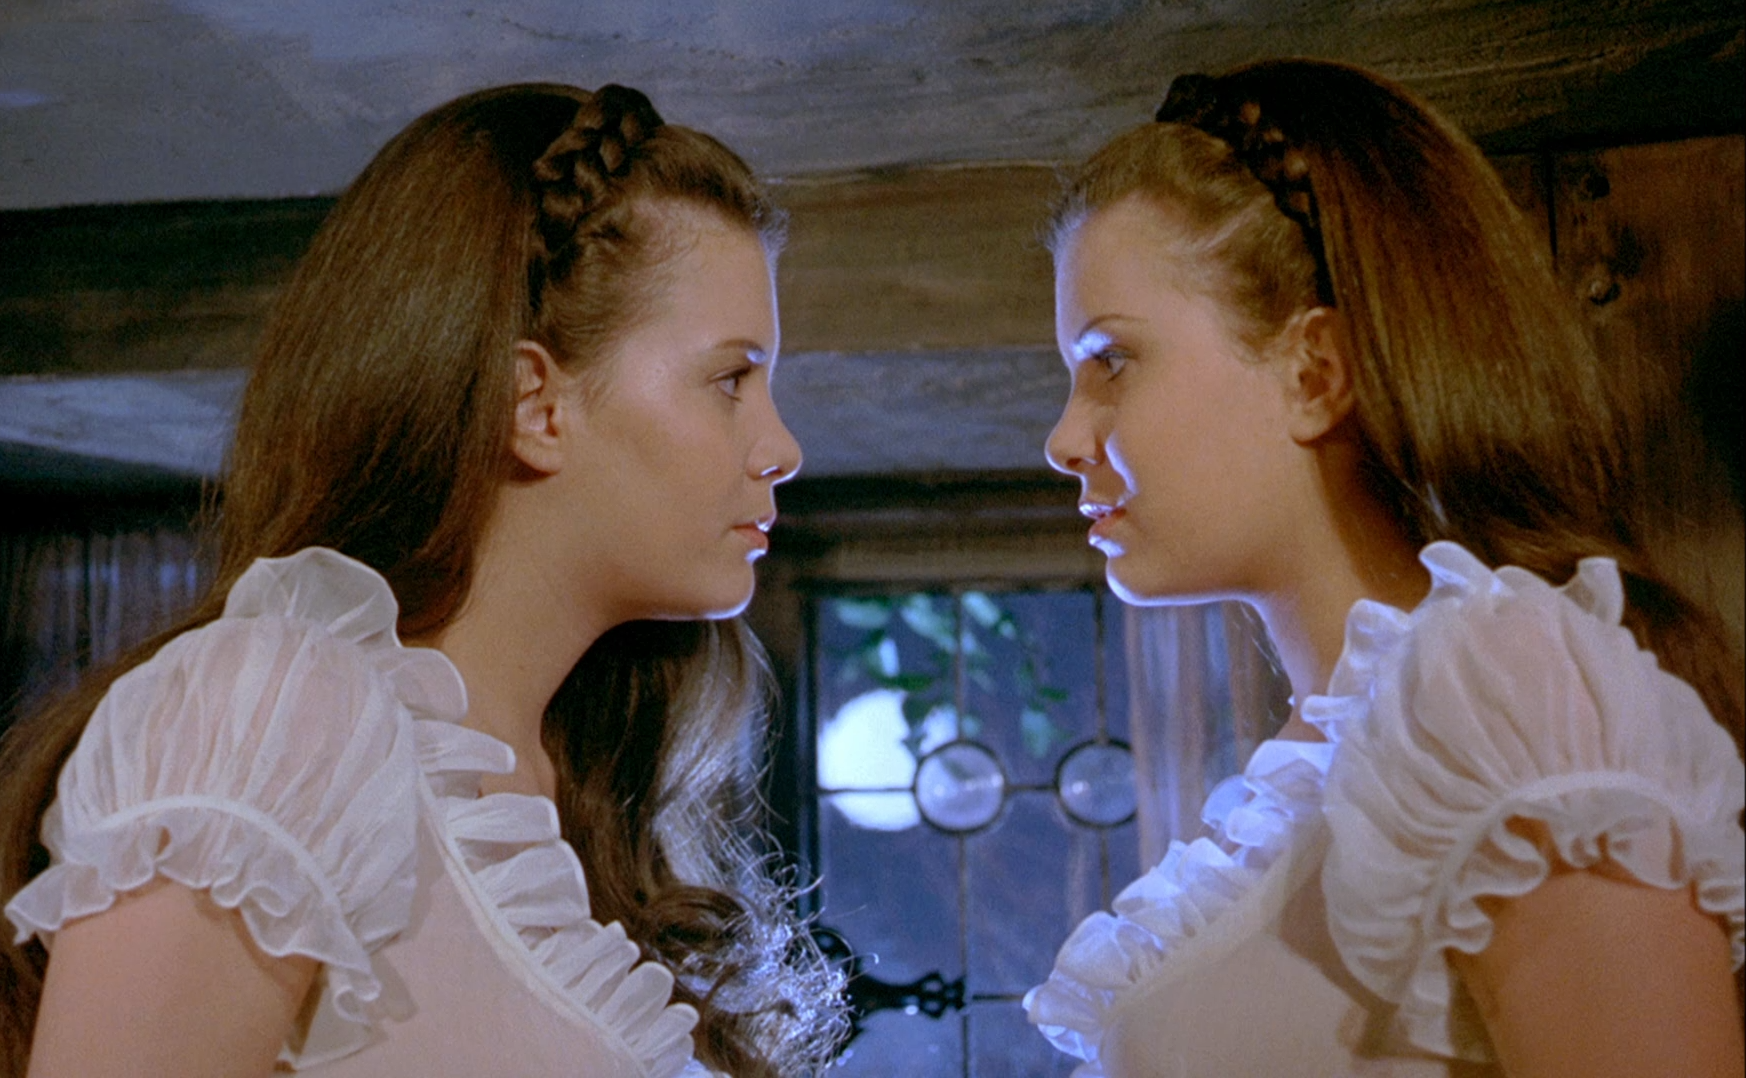 Ephemera From The Hammer Films’ Lesbian Vampire Karnstein